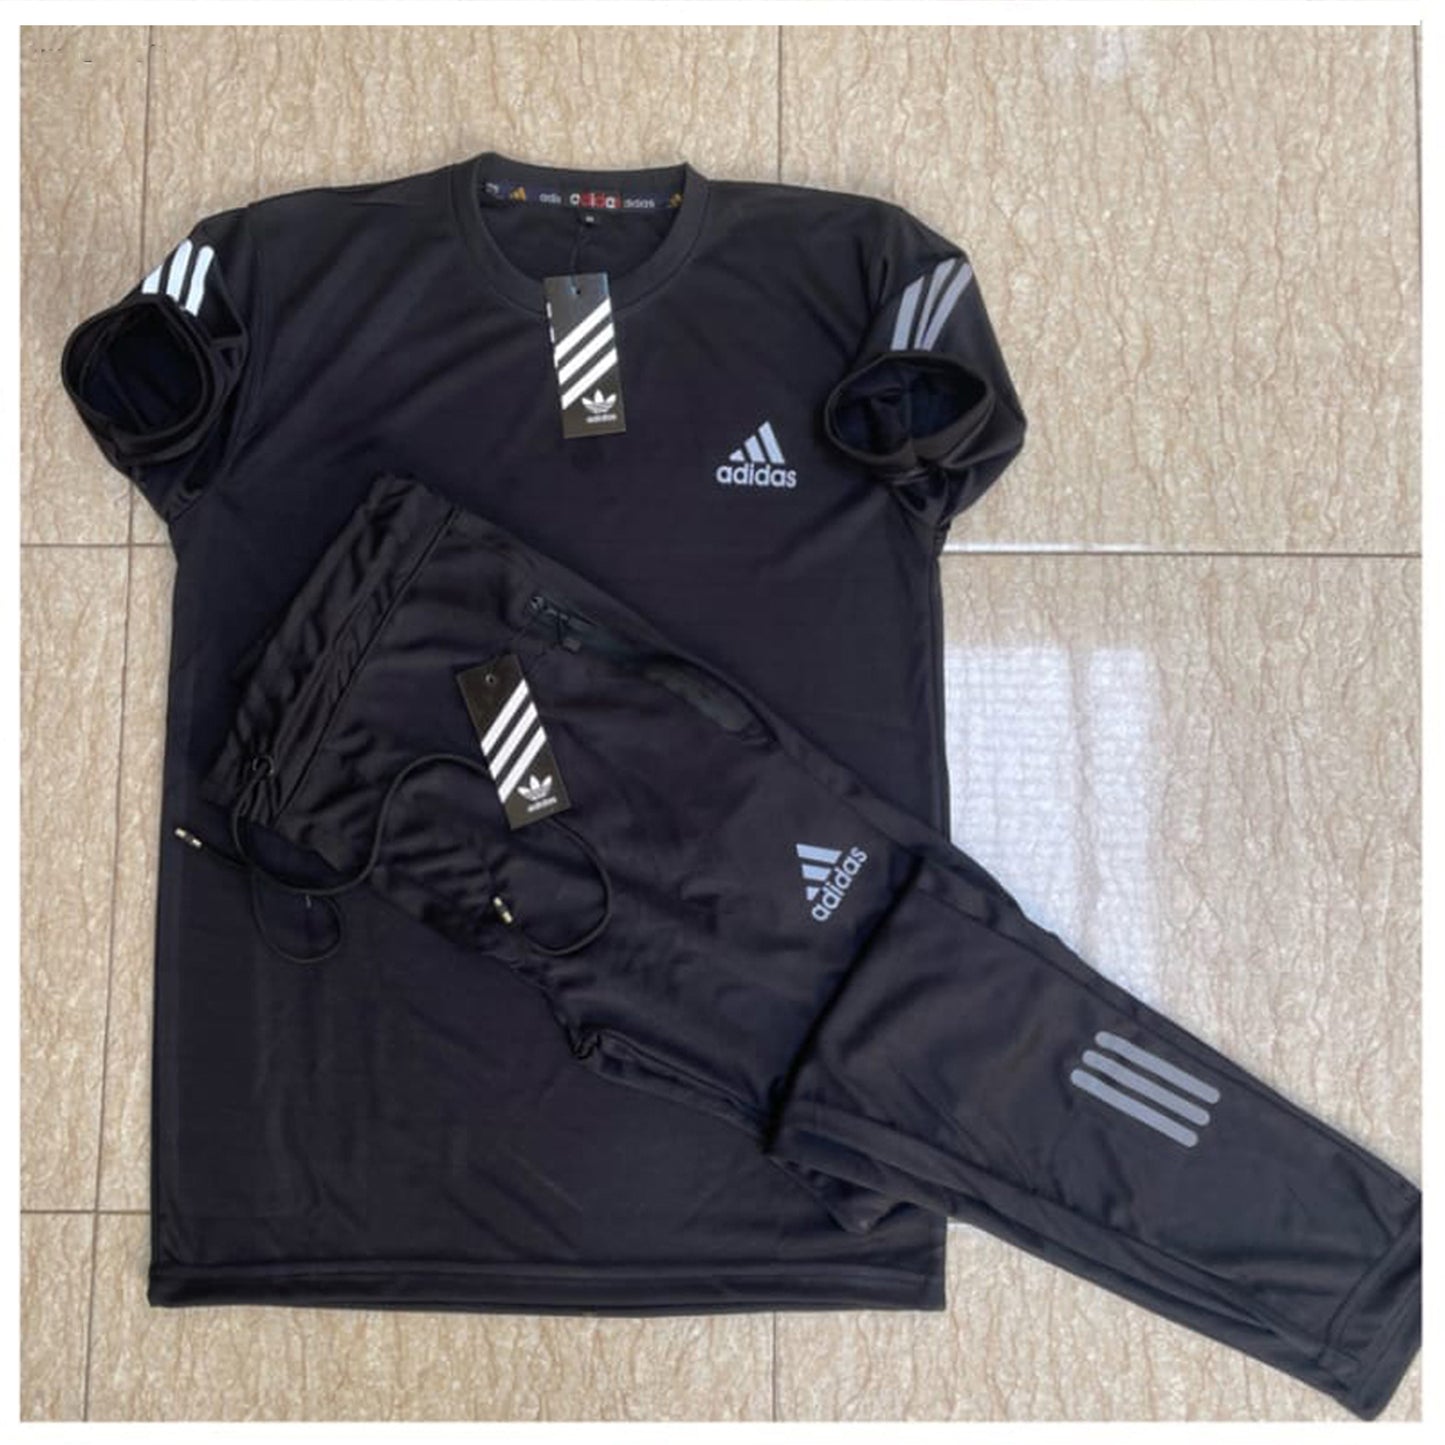 Adidas Three Stripes Tracksuit Black Color